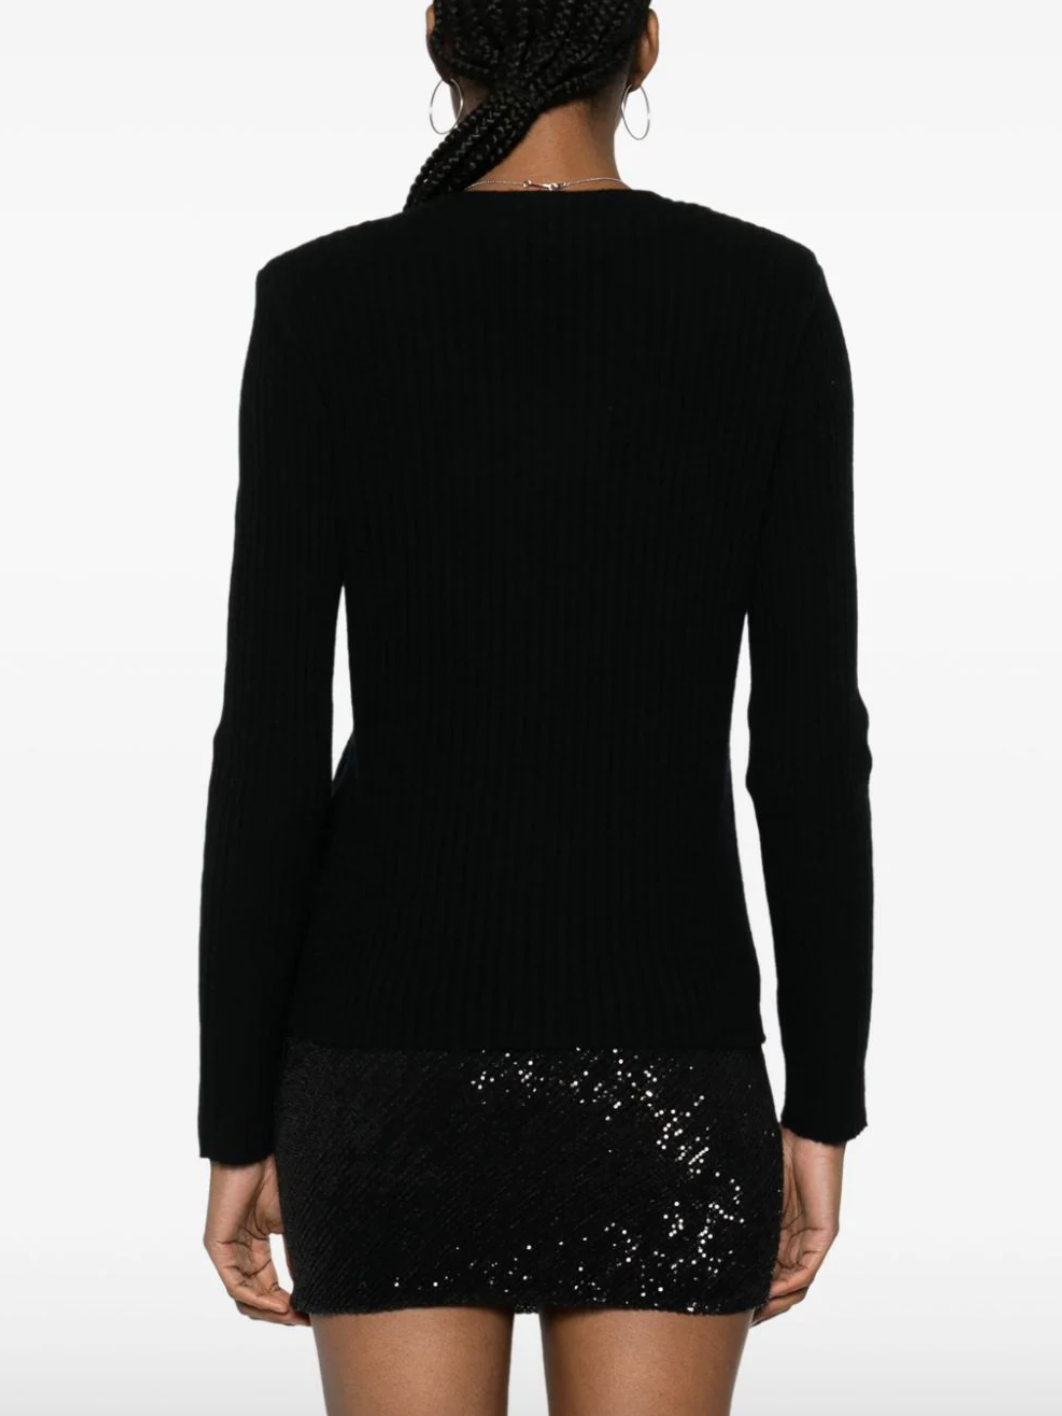 IRO Paris | Devora Sweater - Black